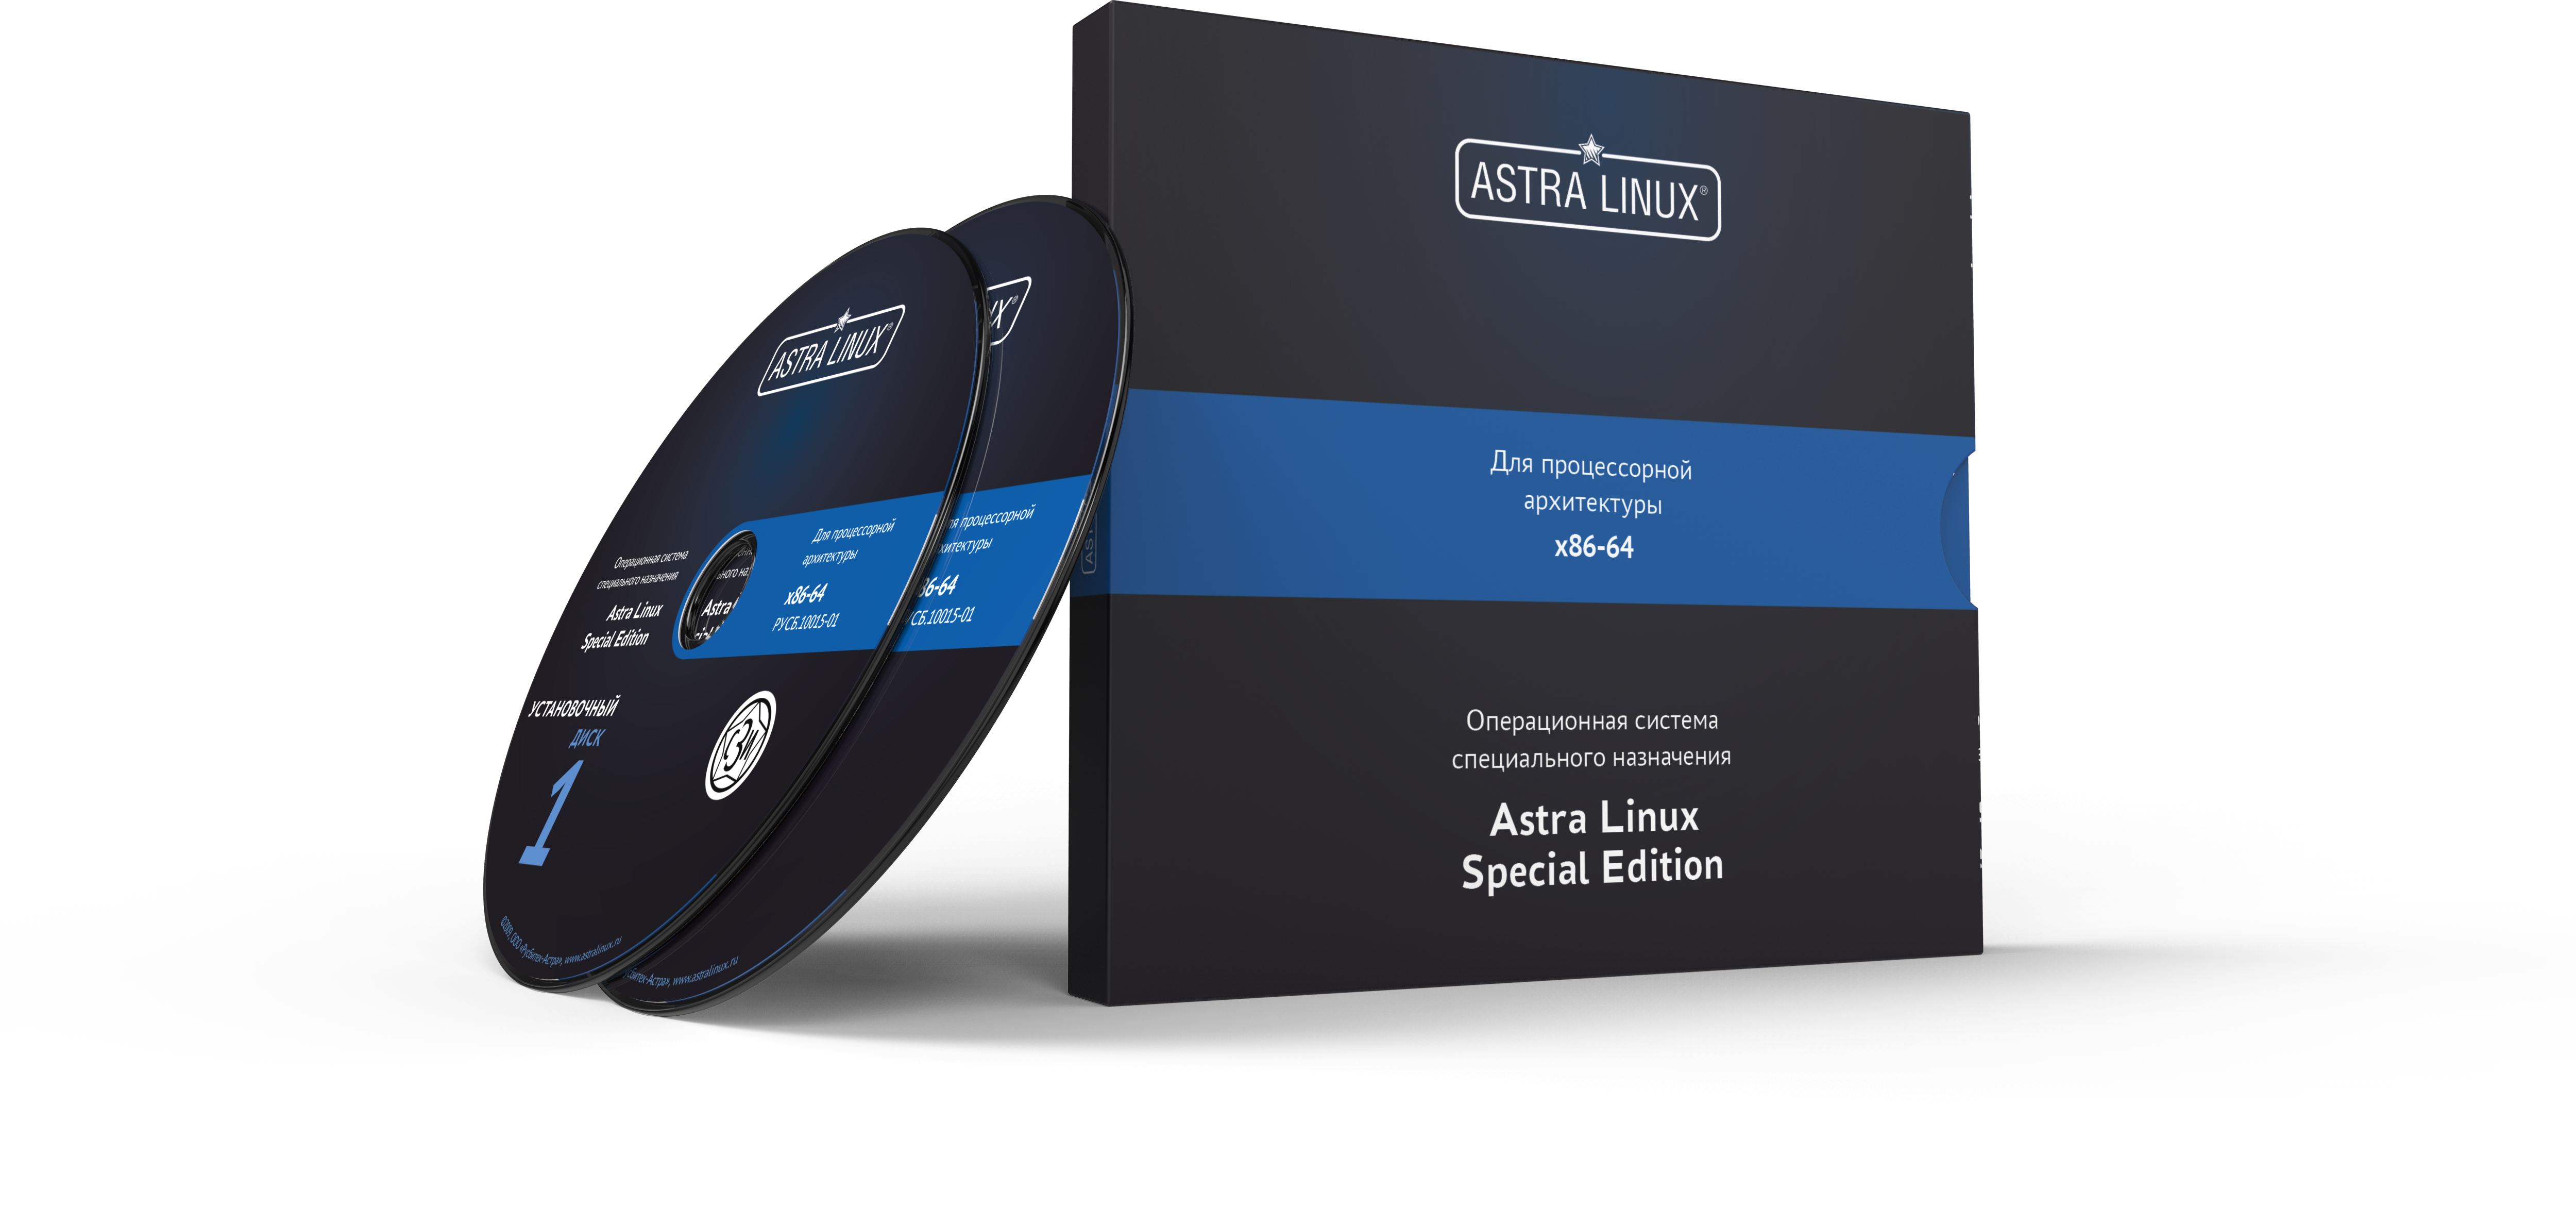 Astra Linux Special Edition 1.7 - Воронеж, "Усиленный", 24 мес., ТП "Стандарт" на 24 мес.